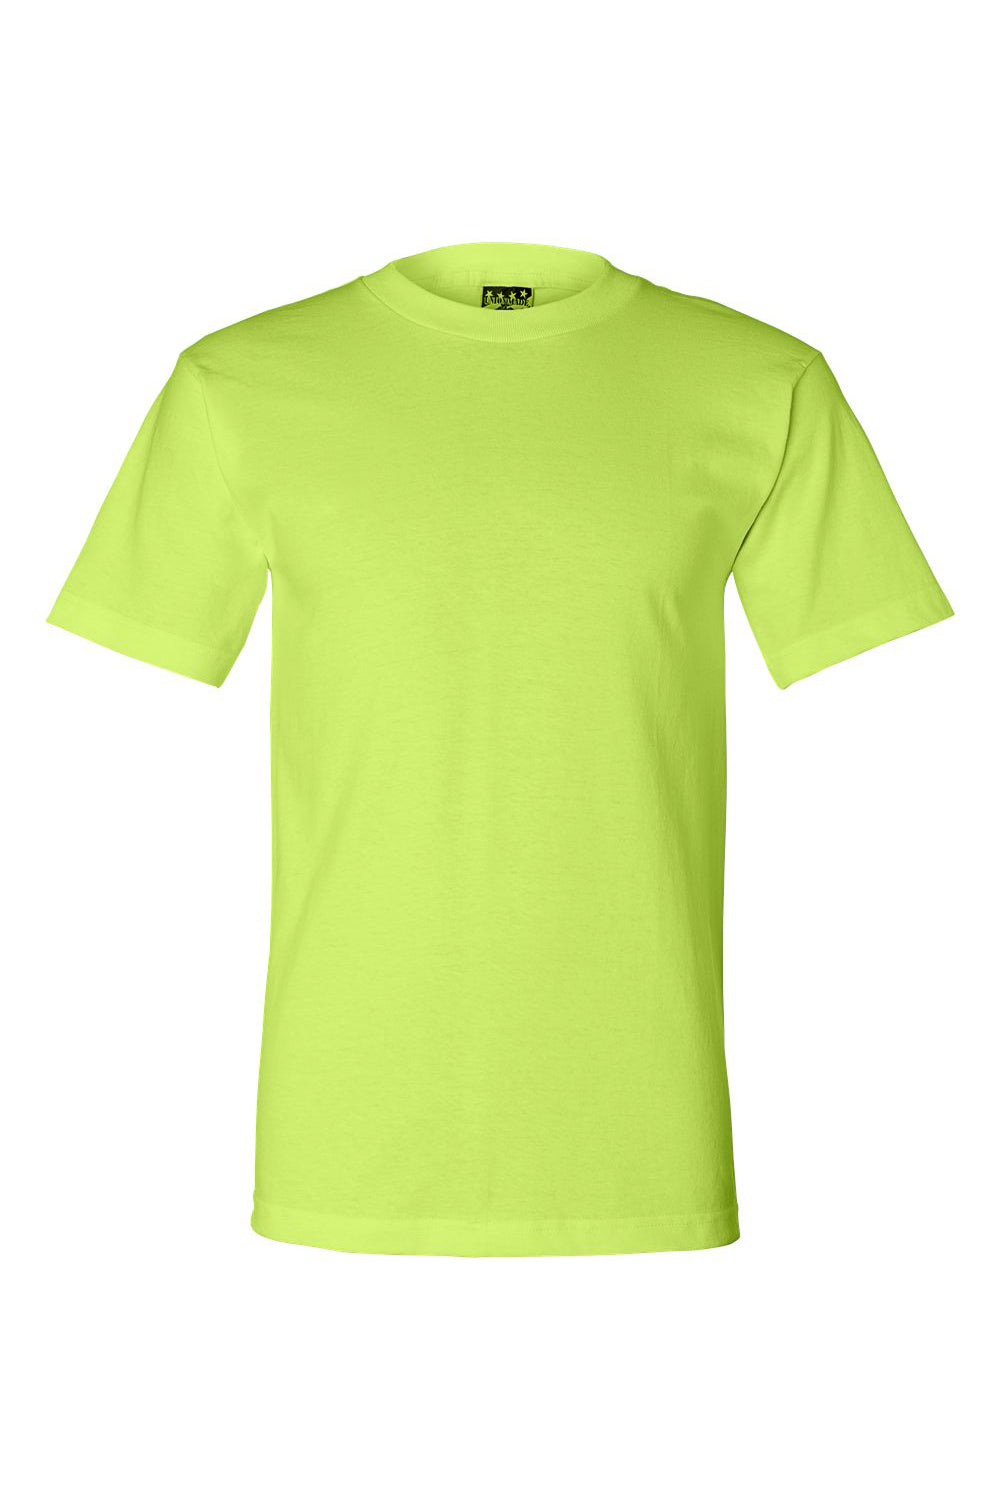 Bayside BA2905 Mens USA Made Short Sleeve Crewneck T-Shirt Lime Green Flat Front